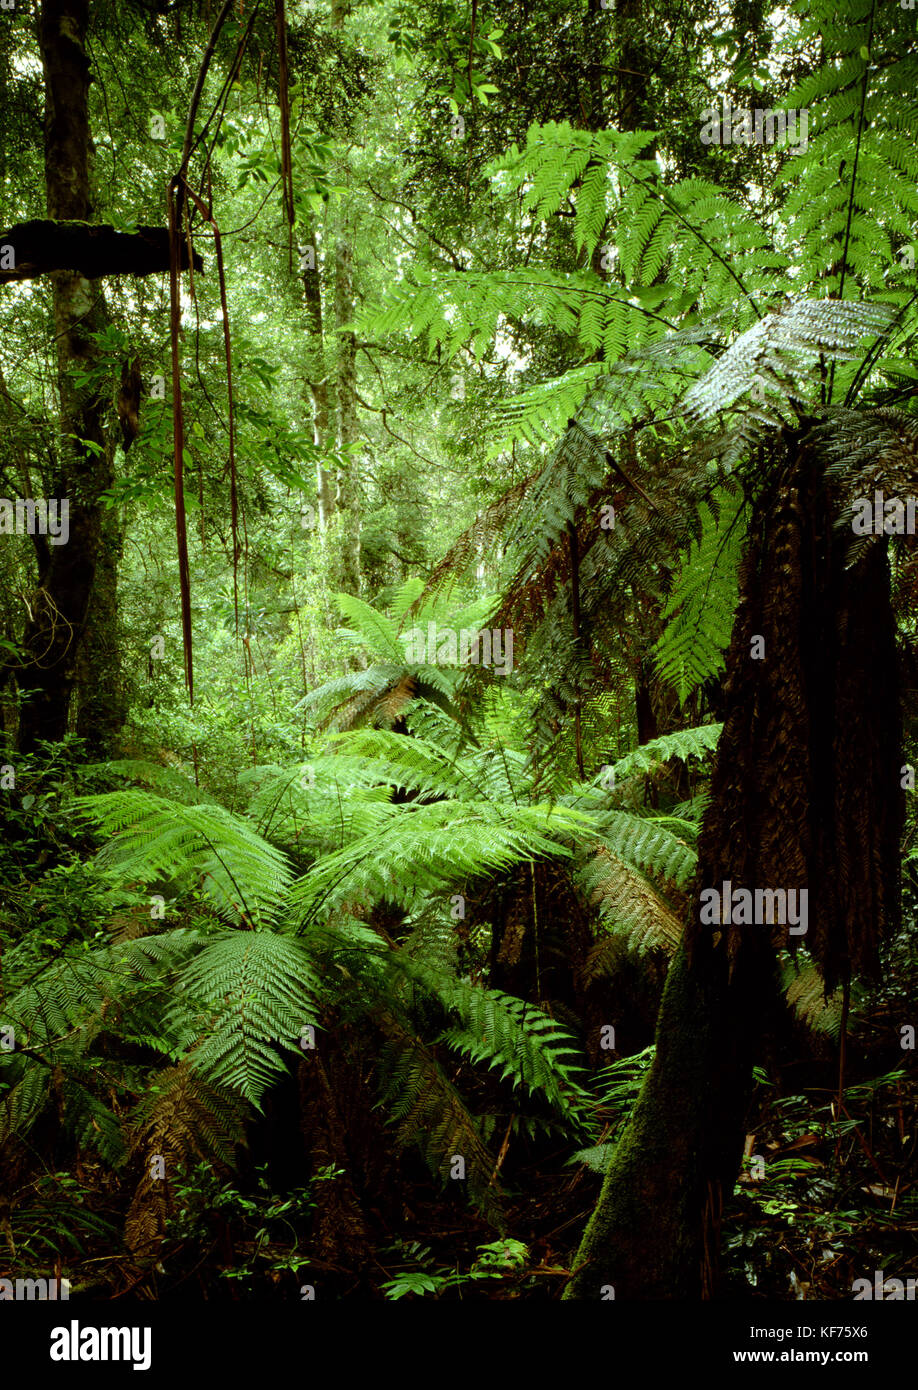 Soft tree ferns (Dicksonia antarctica), growing in wet sclerophyll forest understorey. Errinundra National Park, Victoria, Austrlaia, Australia Stock Photo